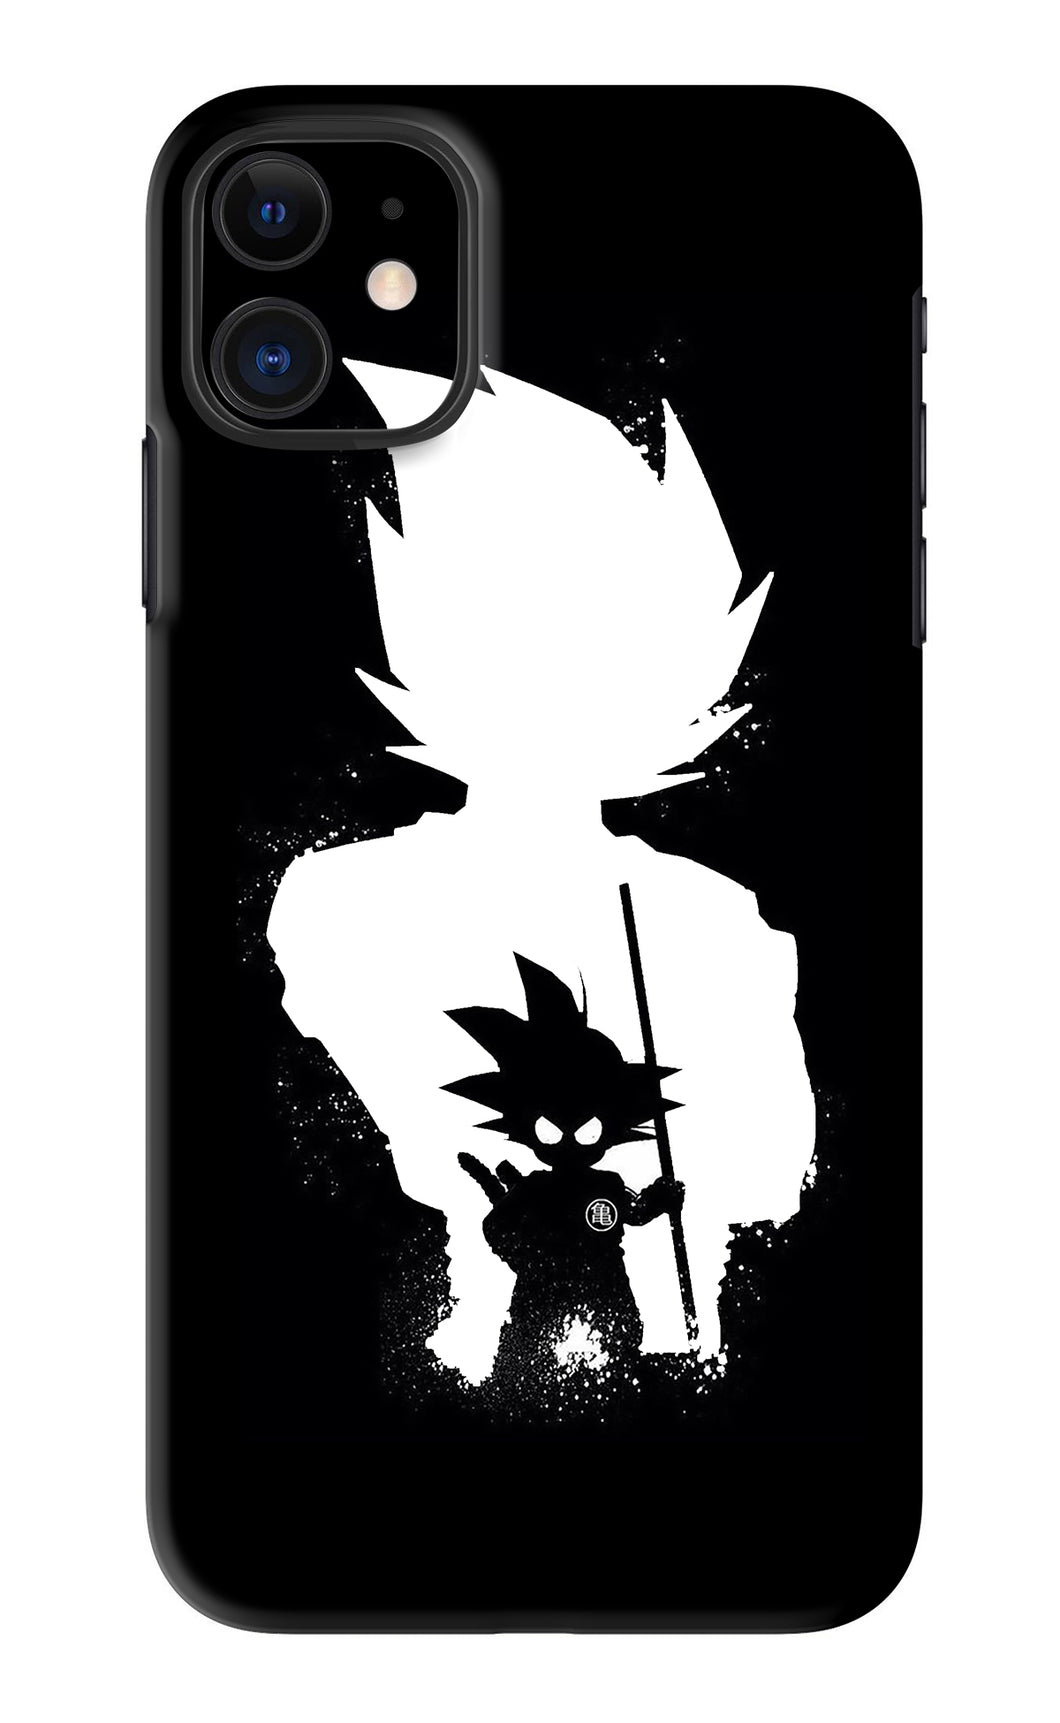 Goku Shadow iPhone 11 Back Skin Wrap